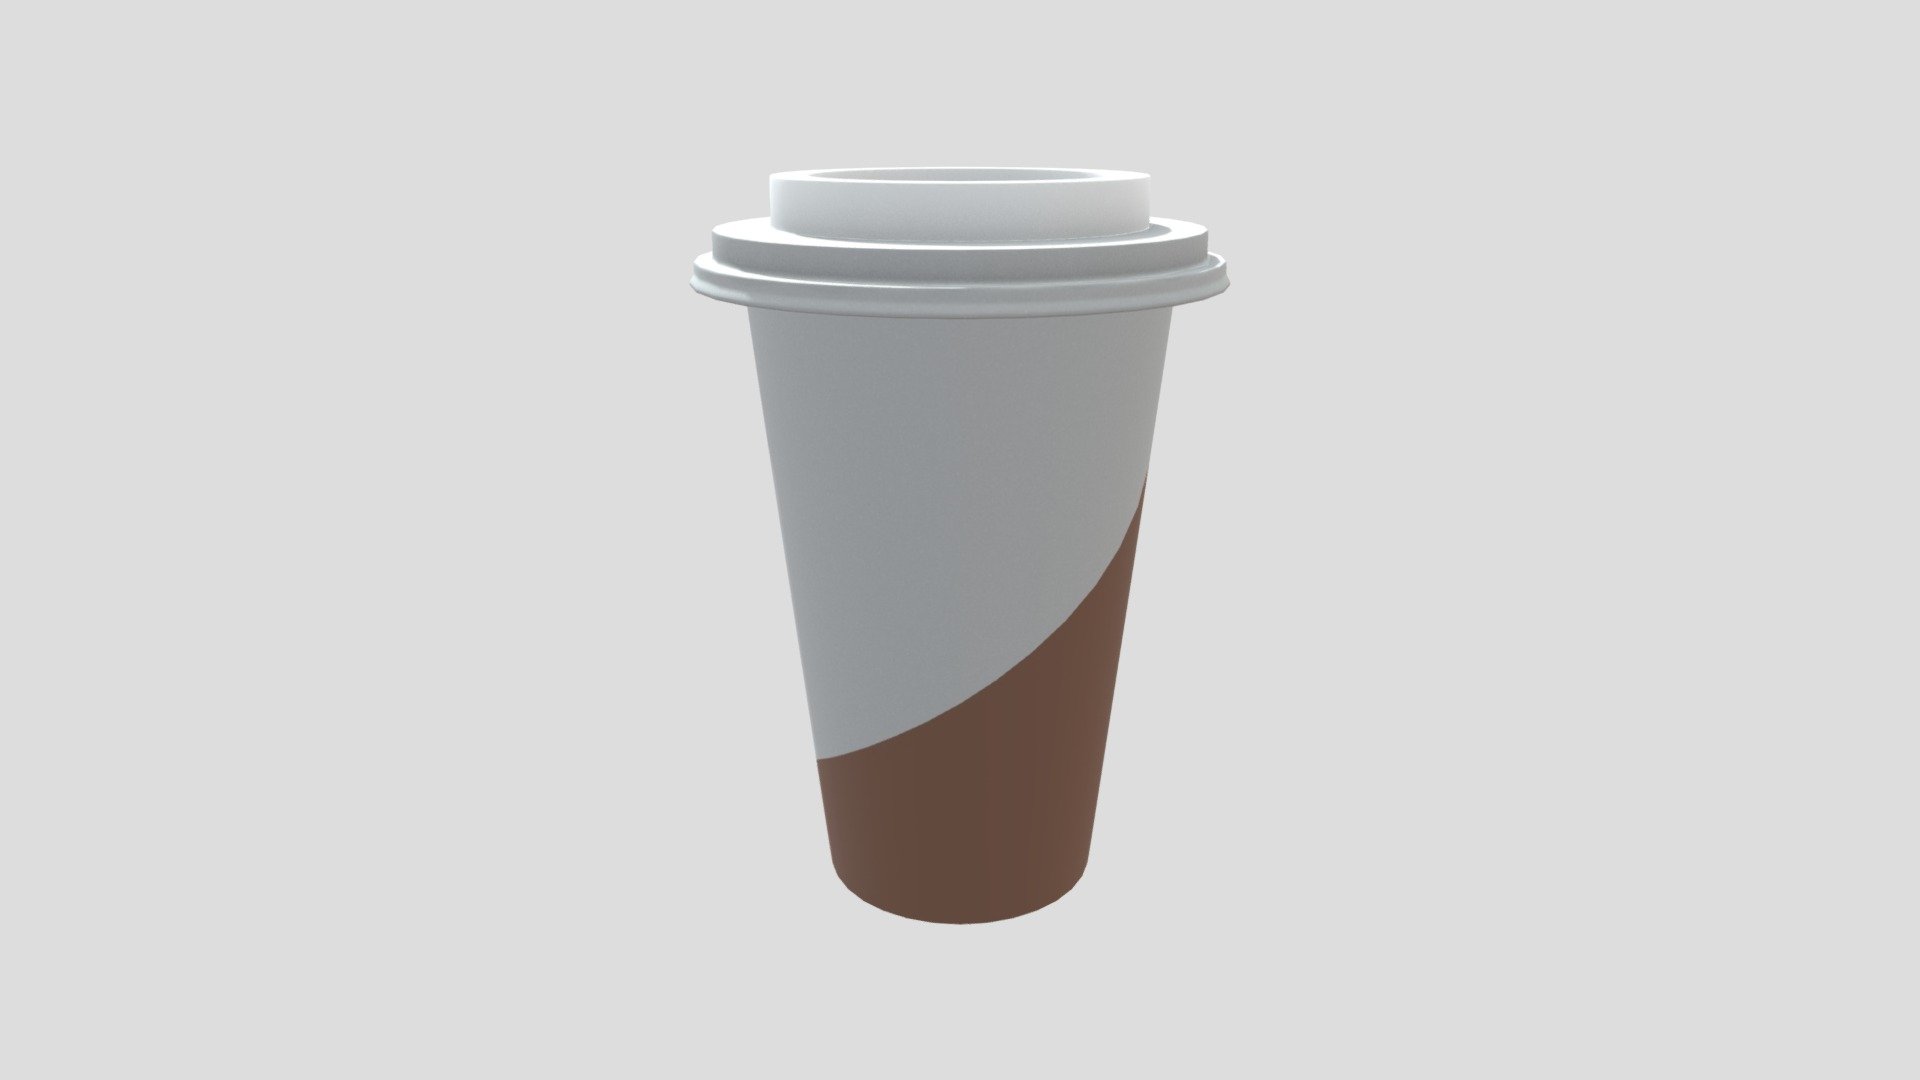 Highpoly Take away starbucks coffe cup style 3d model